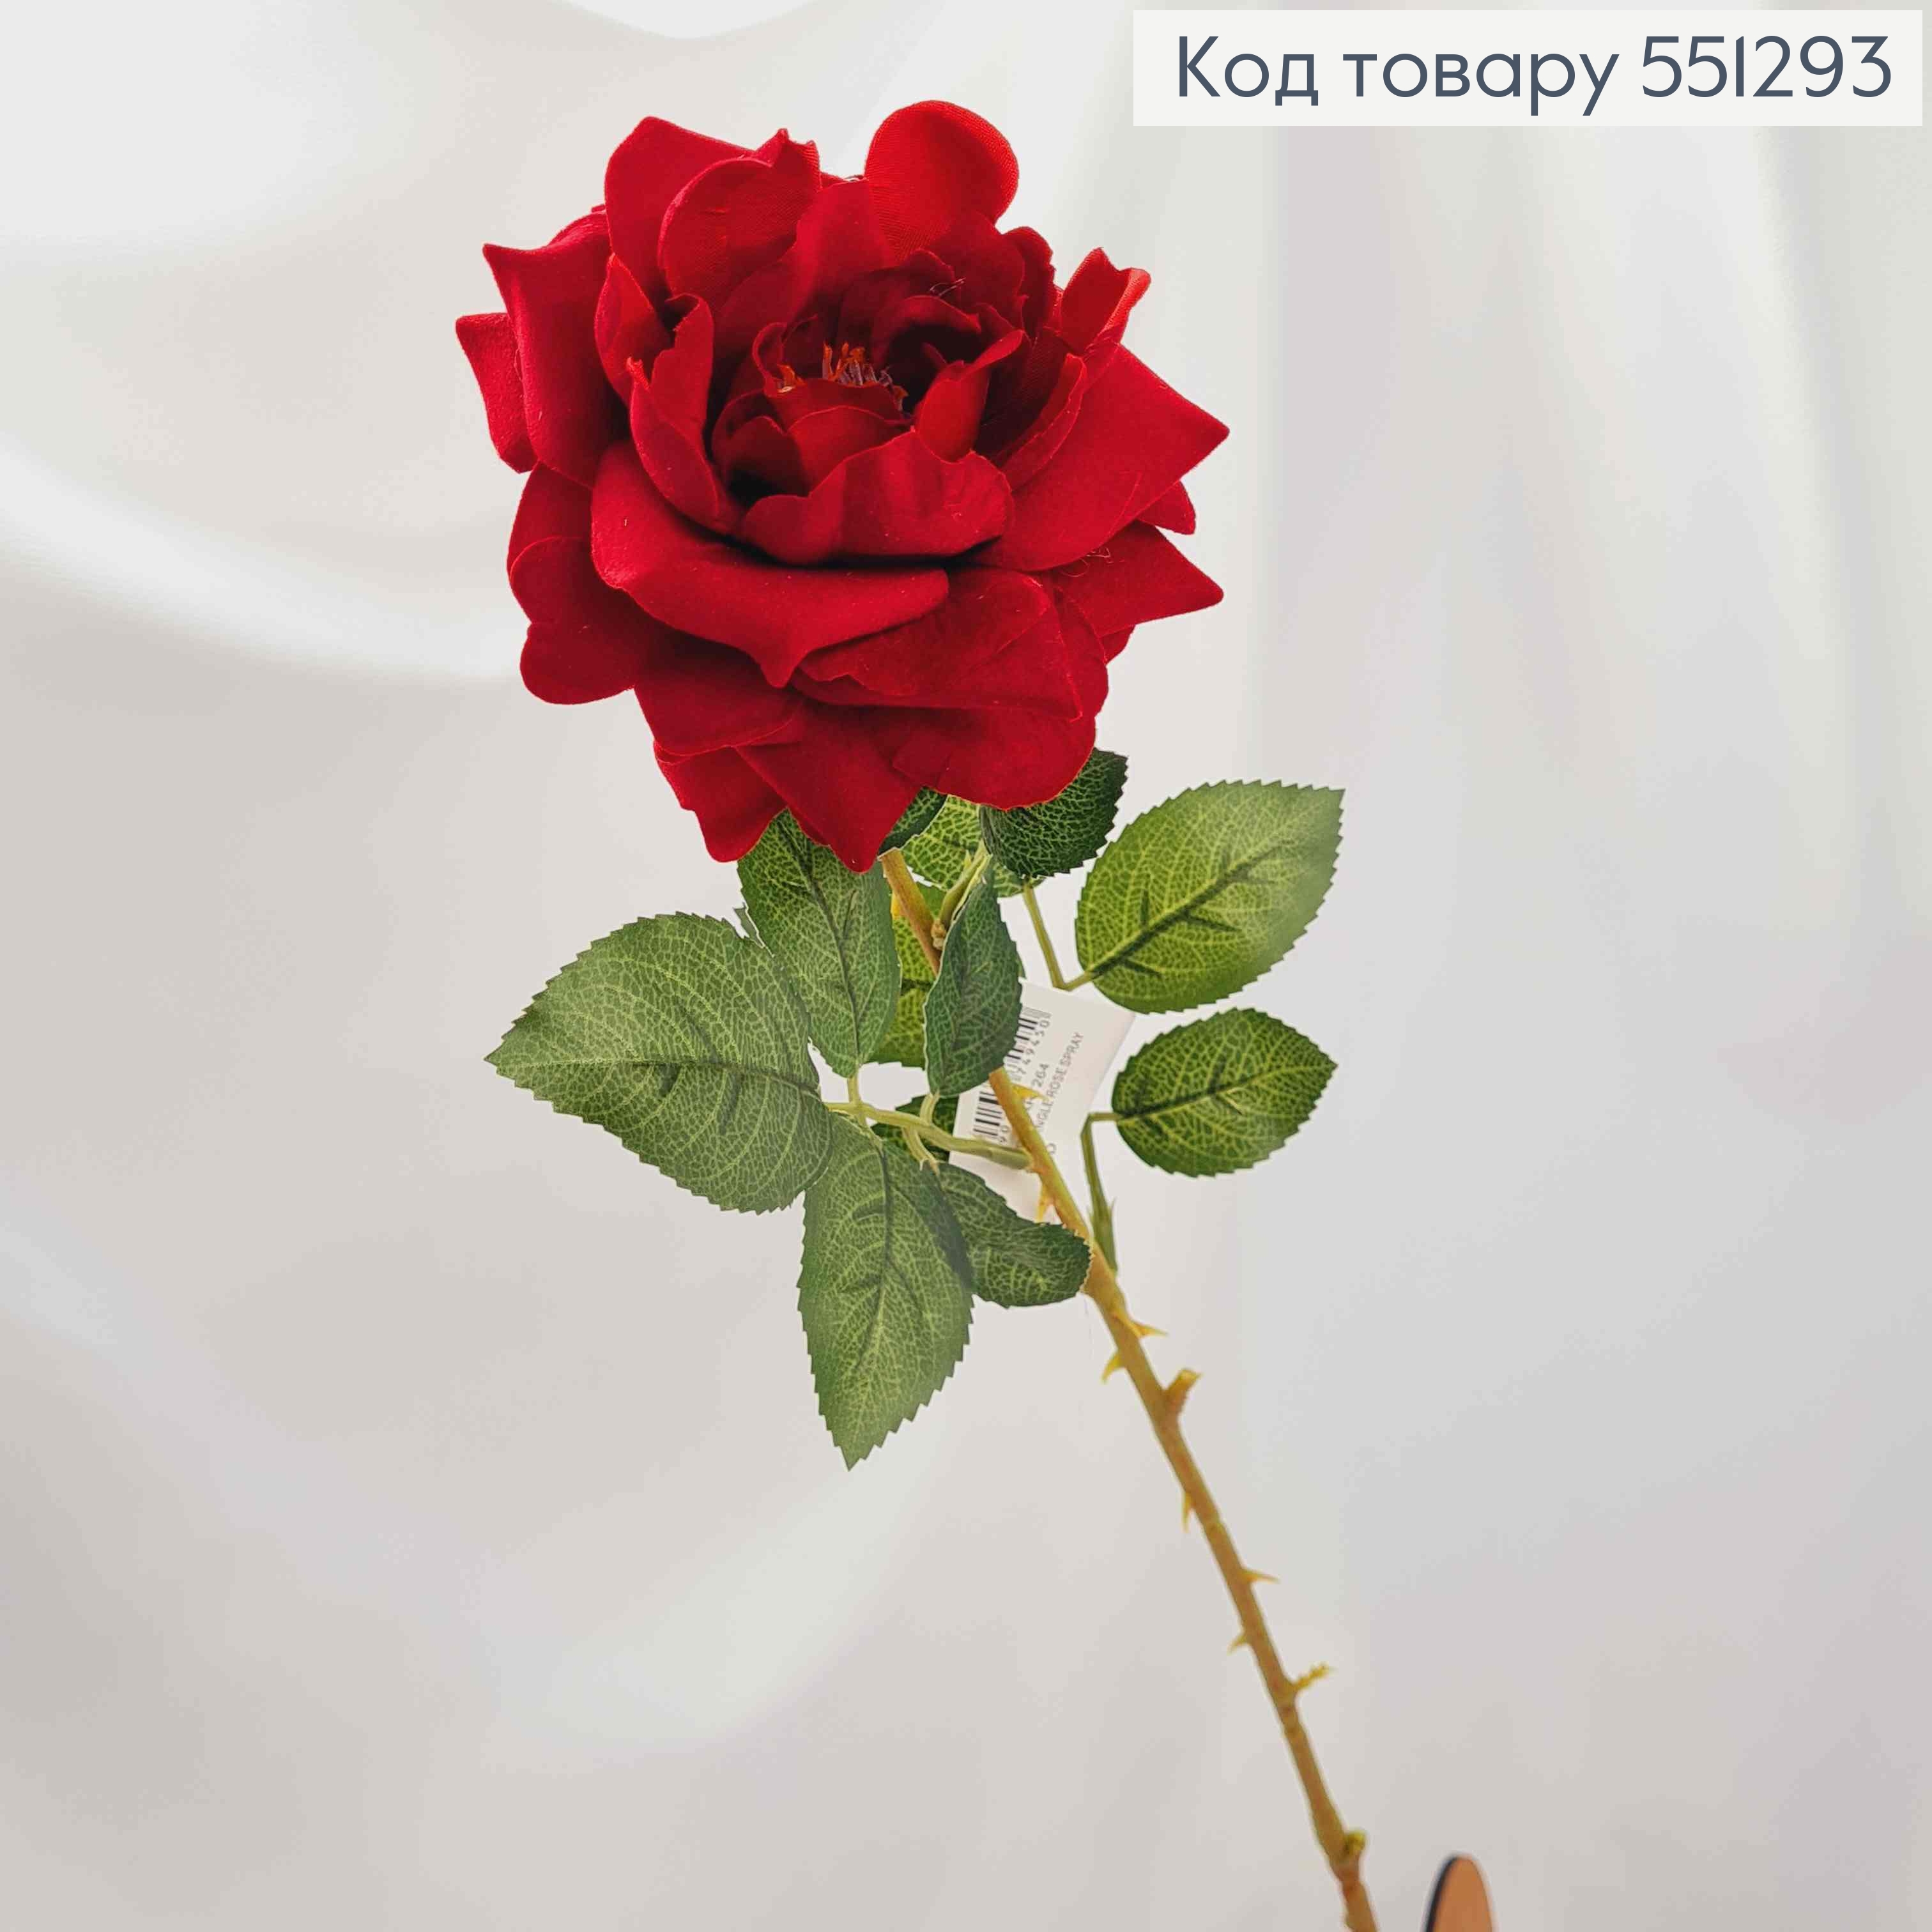 Штучна квітка ЧЕРВОНА троянда 10см, бархатна,  на металевому стержні, висотою 62см  551293 фото 2